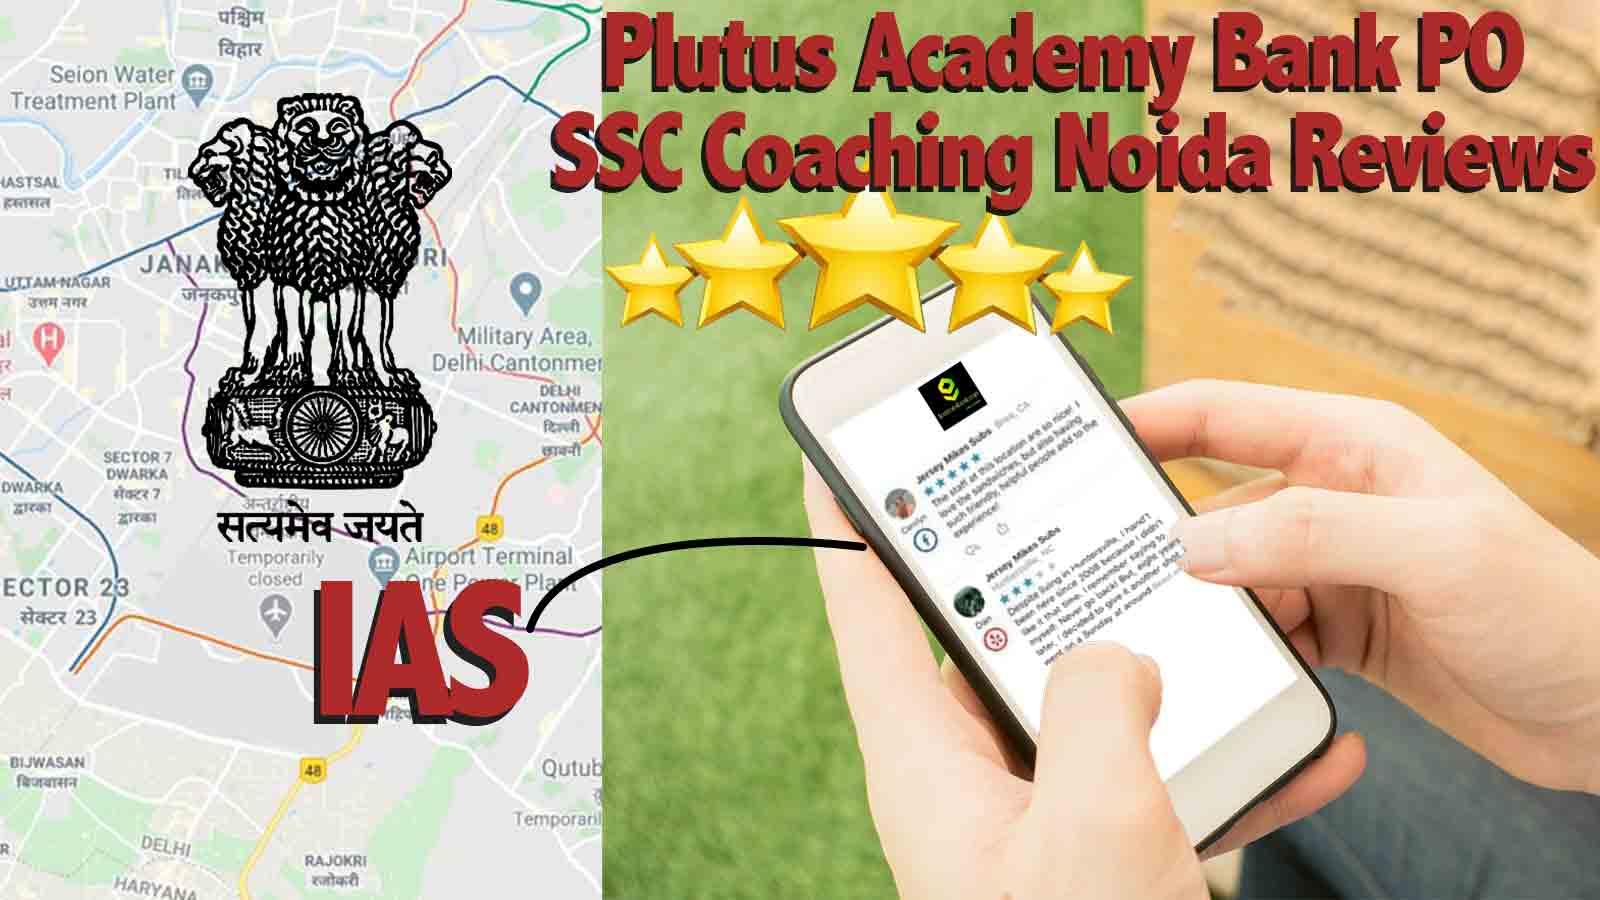 Plutus Academy Bank PO SSC Coaching Noida Review